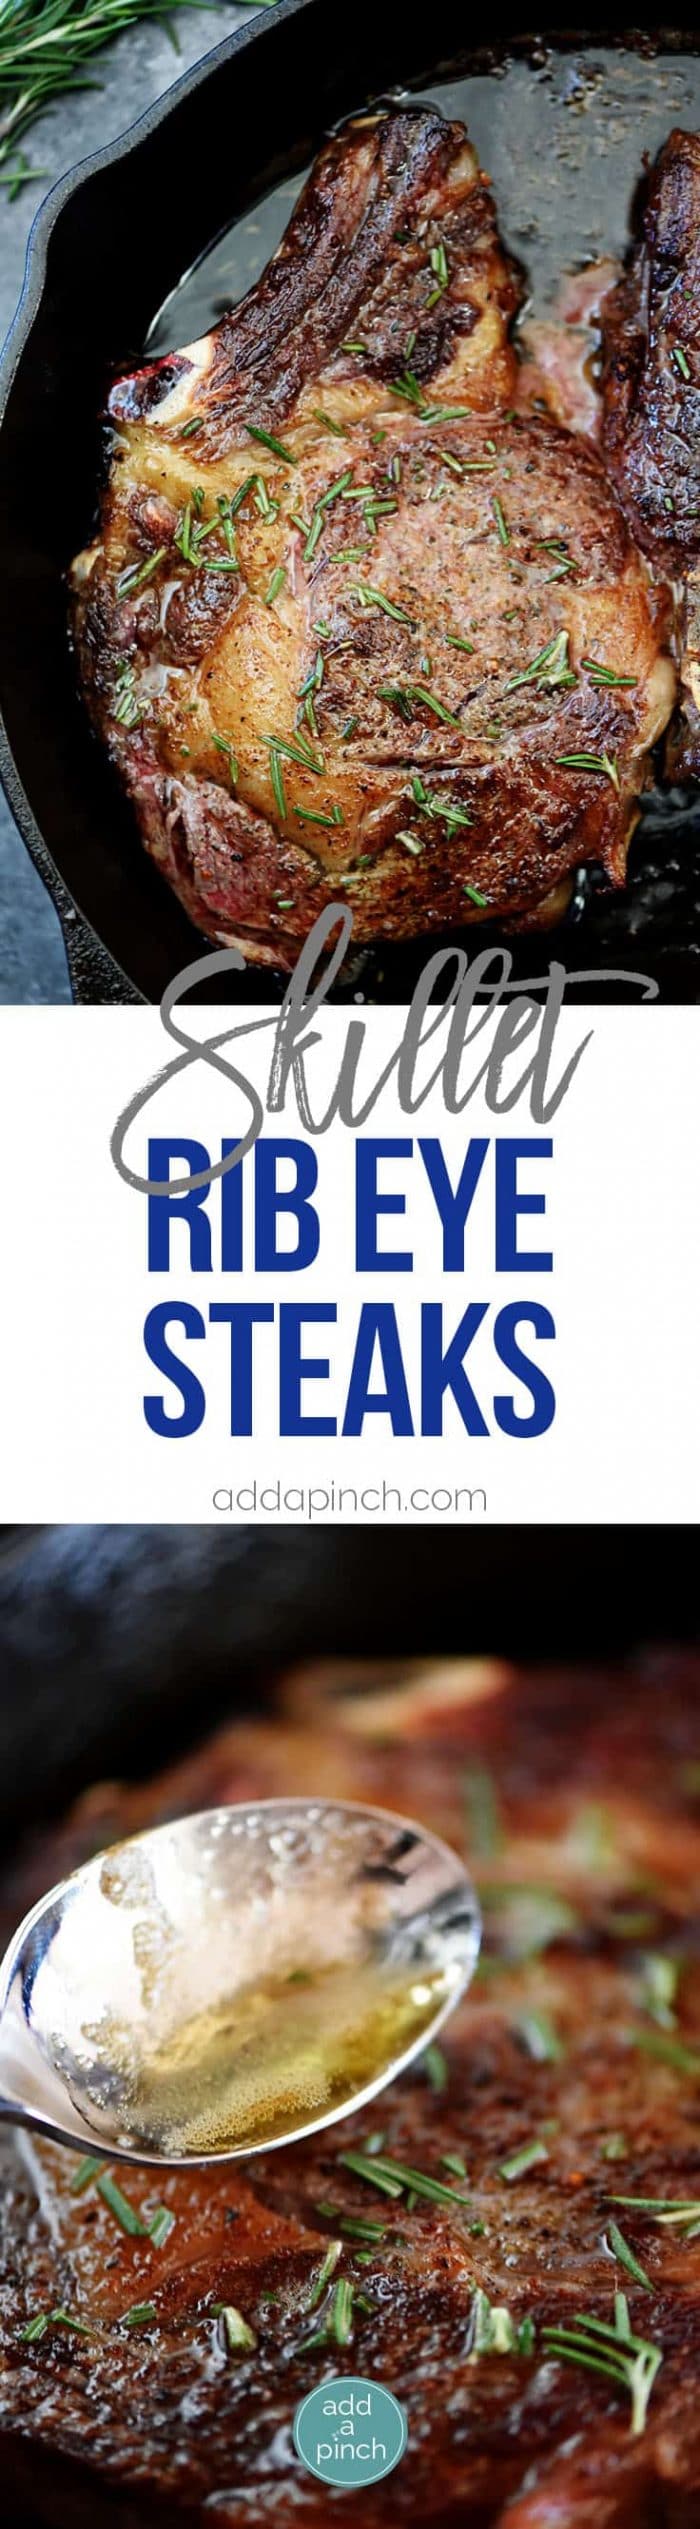 Skillet Rib Eye Steaks Recipe - Butter-basted skillet rib eye steaks that will remind you of your favorite steak house rib eye steaks! // addapinch.com